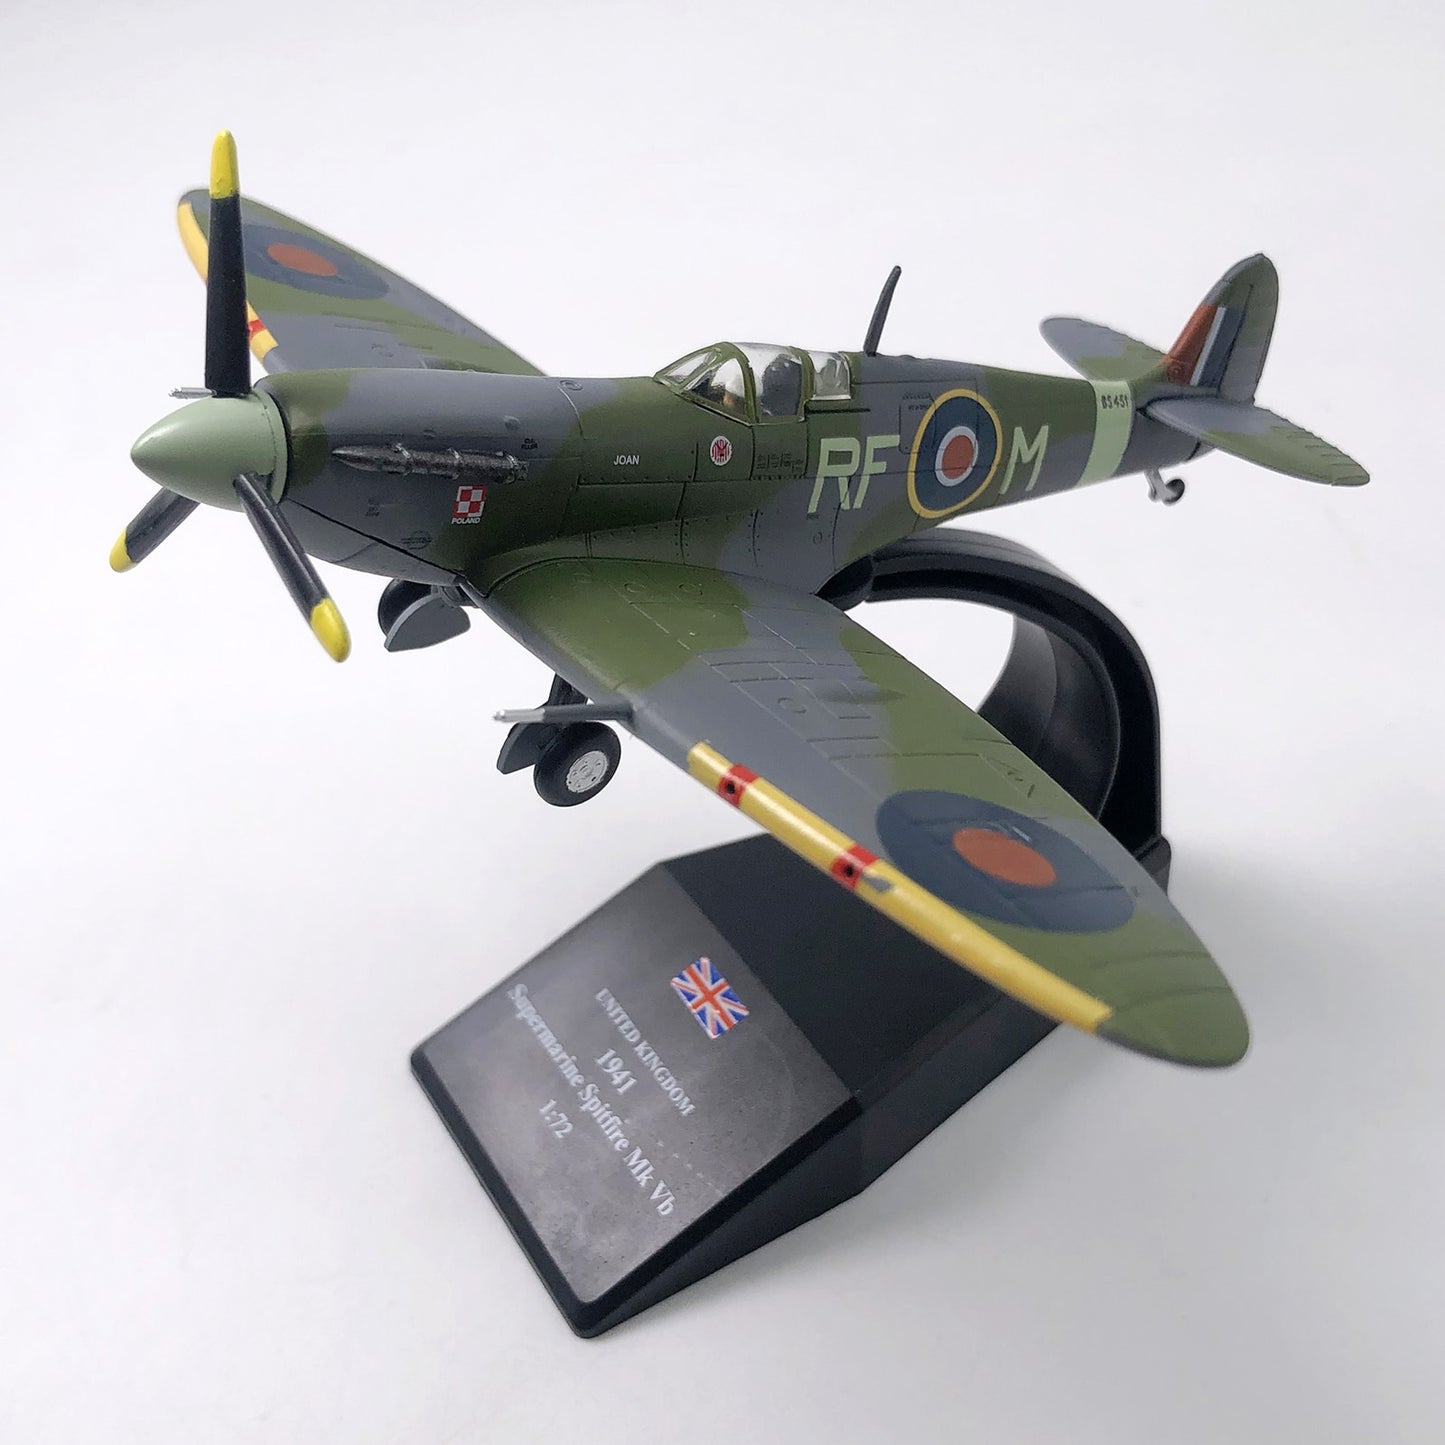 1/72 Scale World War II WWII England British UK Spitfire Fighter Airplane Model